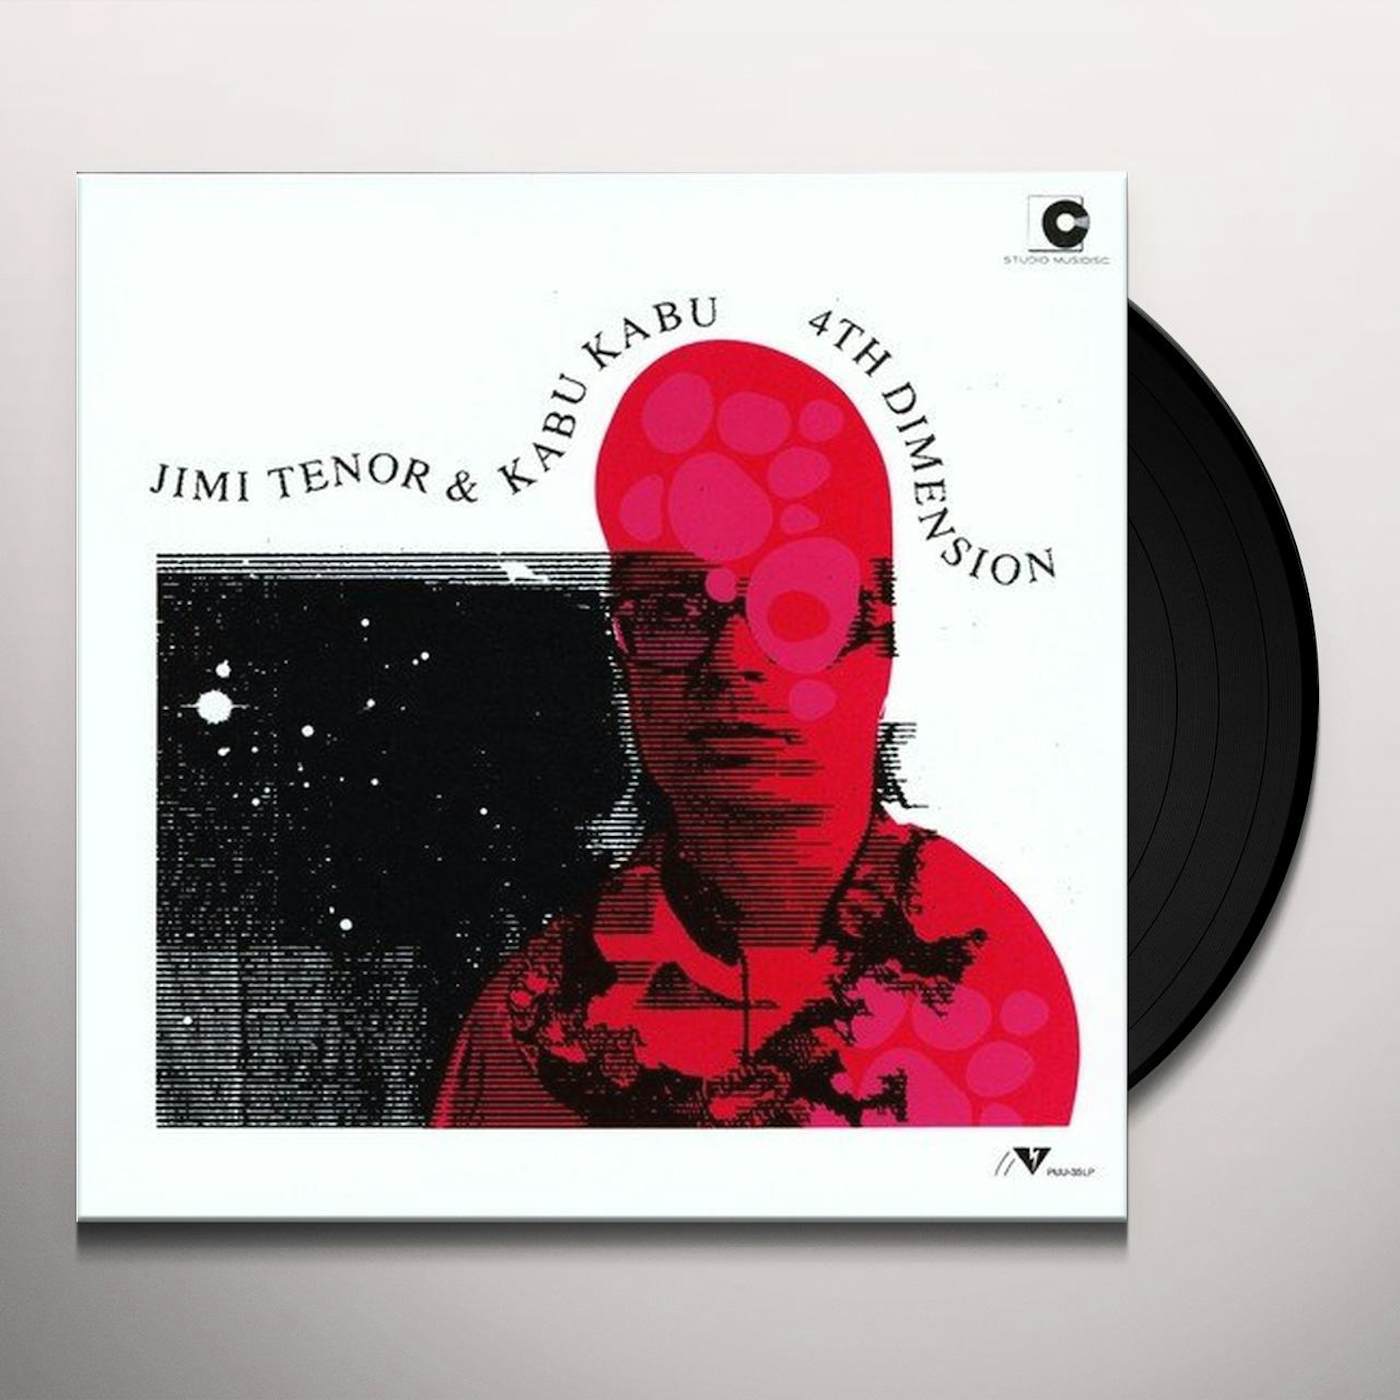 jimi tenor & kabu kabu 4th Dimension Vinyl Record